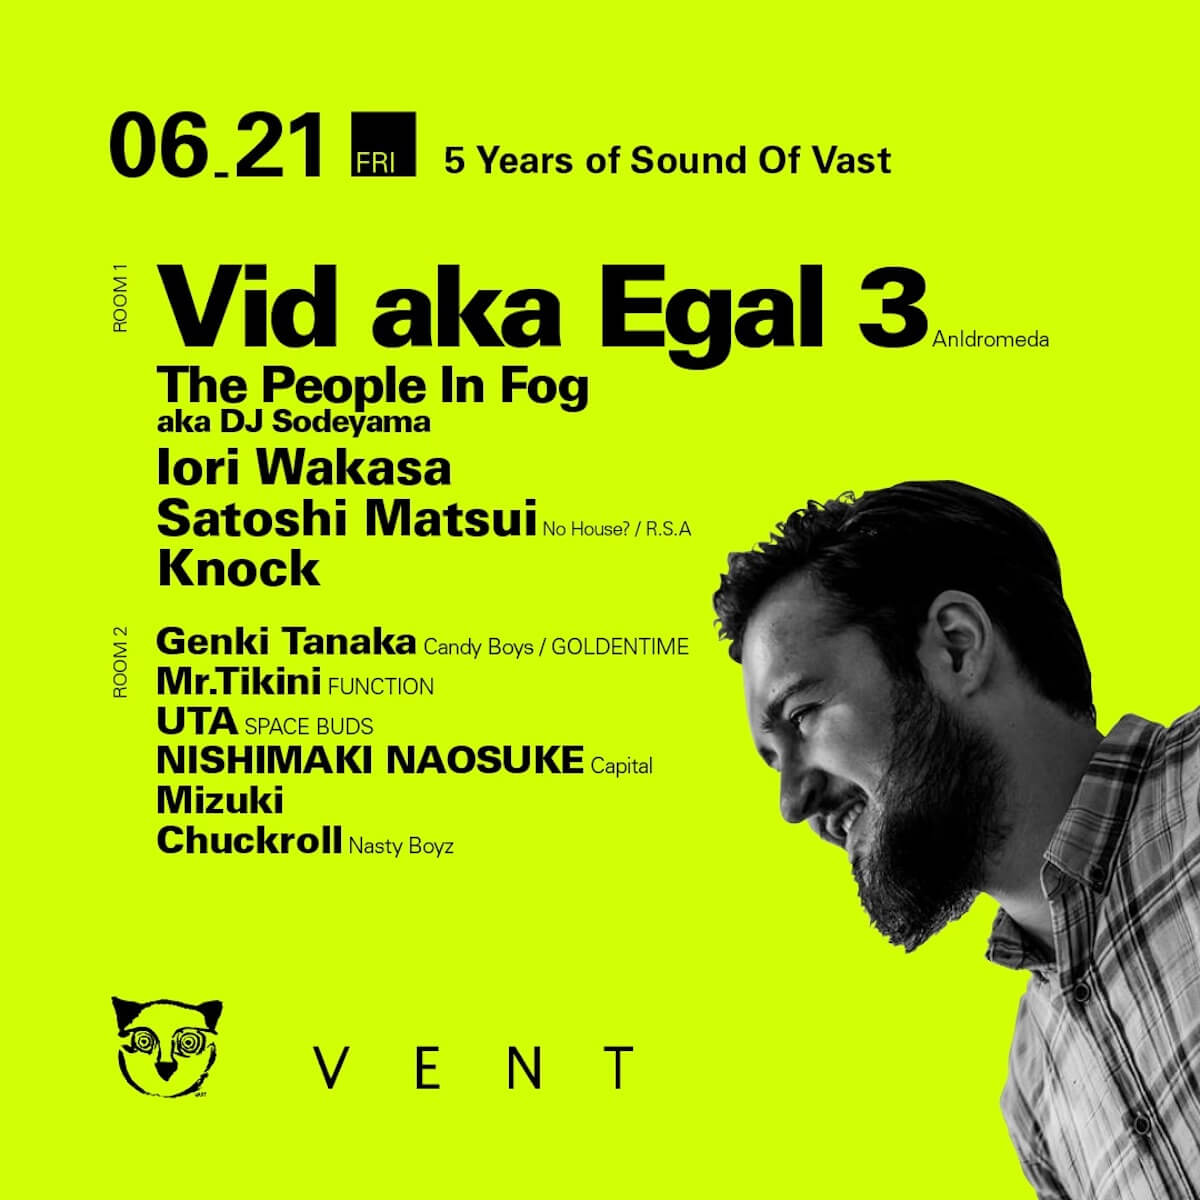 Knock主宰レーベル「Sound Of Vast」の5周年パーティーがVENTで開催｜Vid、The People In Fog、Iori Wakasaらが登場 music190523-5years-of-soundofvast-2